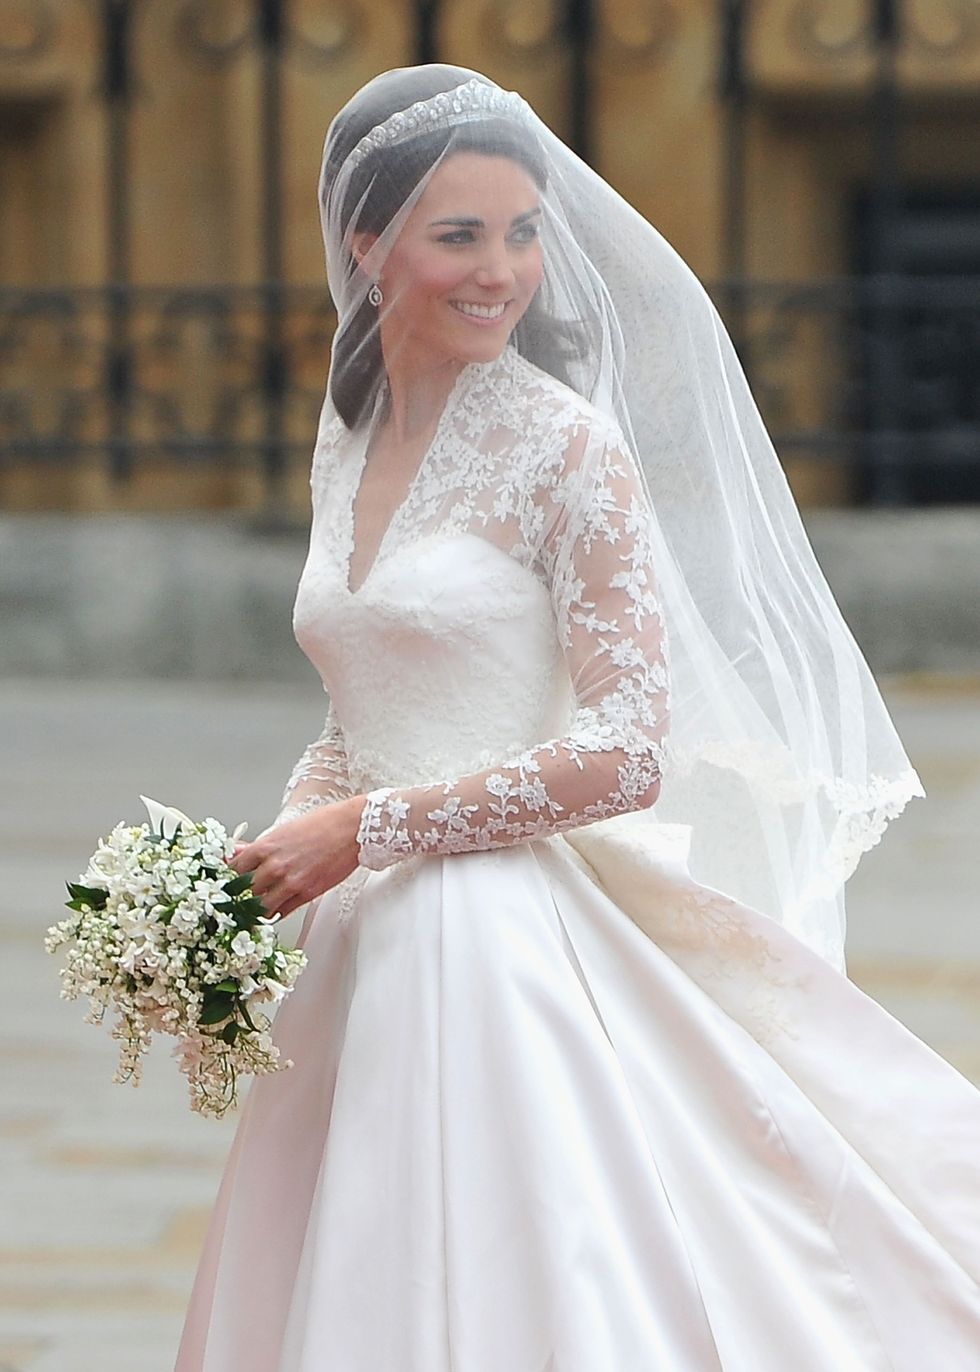 Royal wedding veil